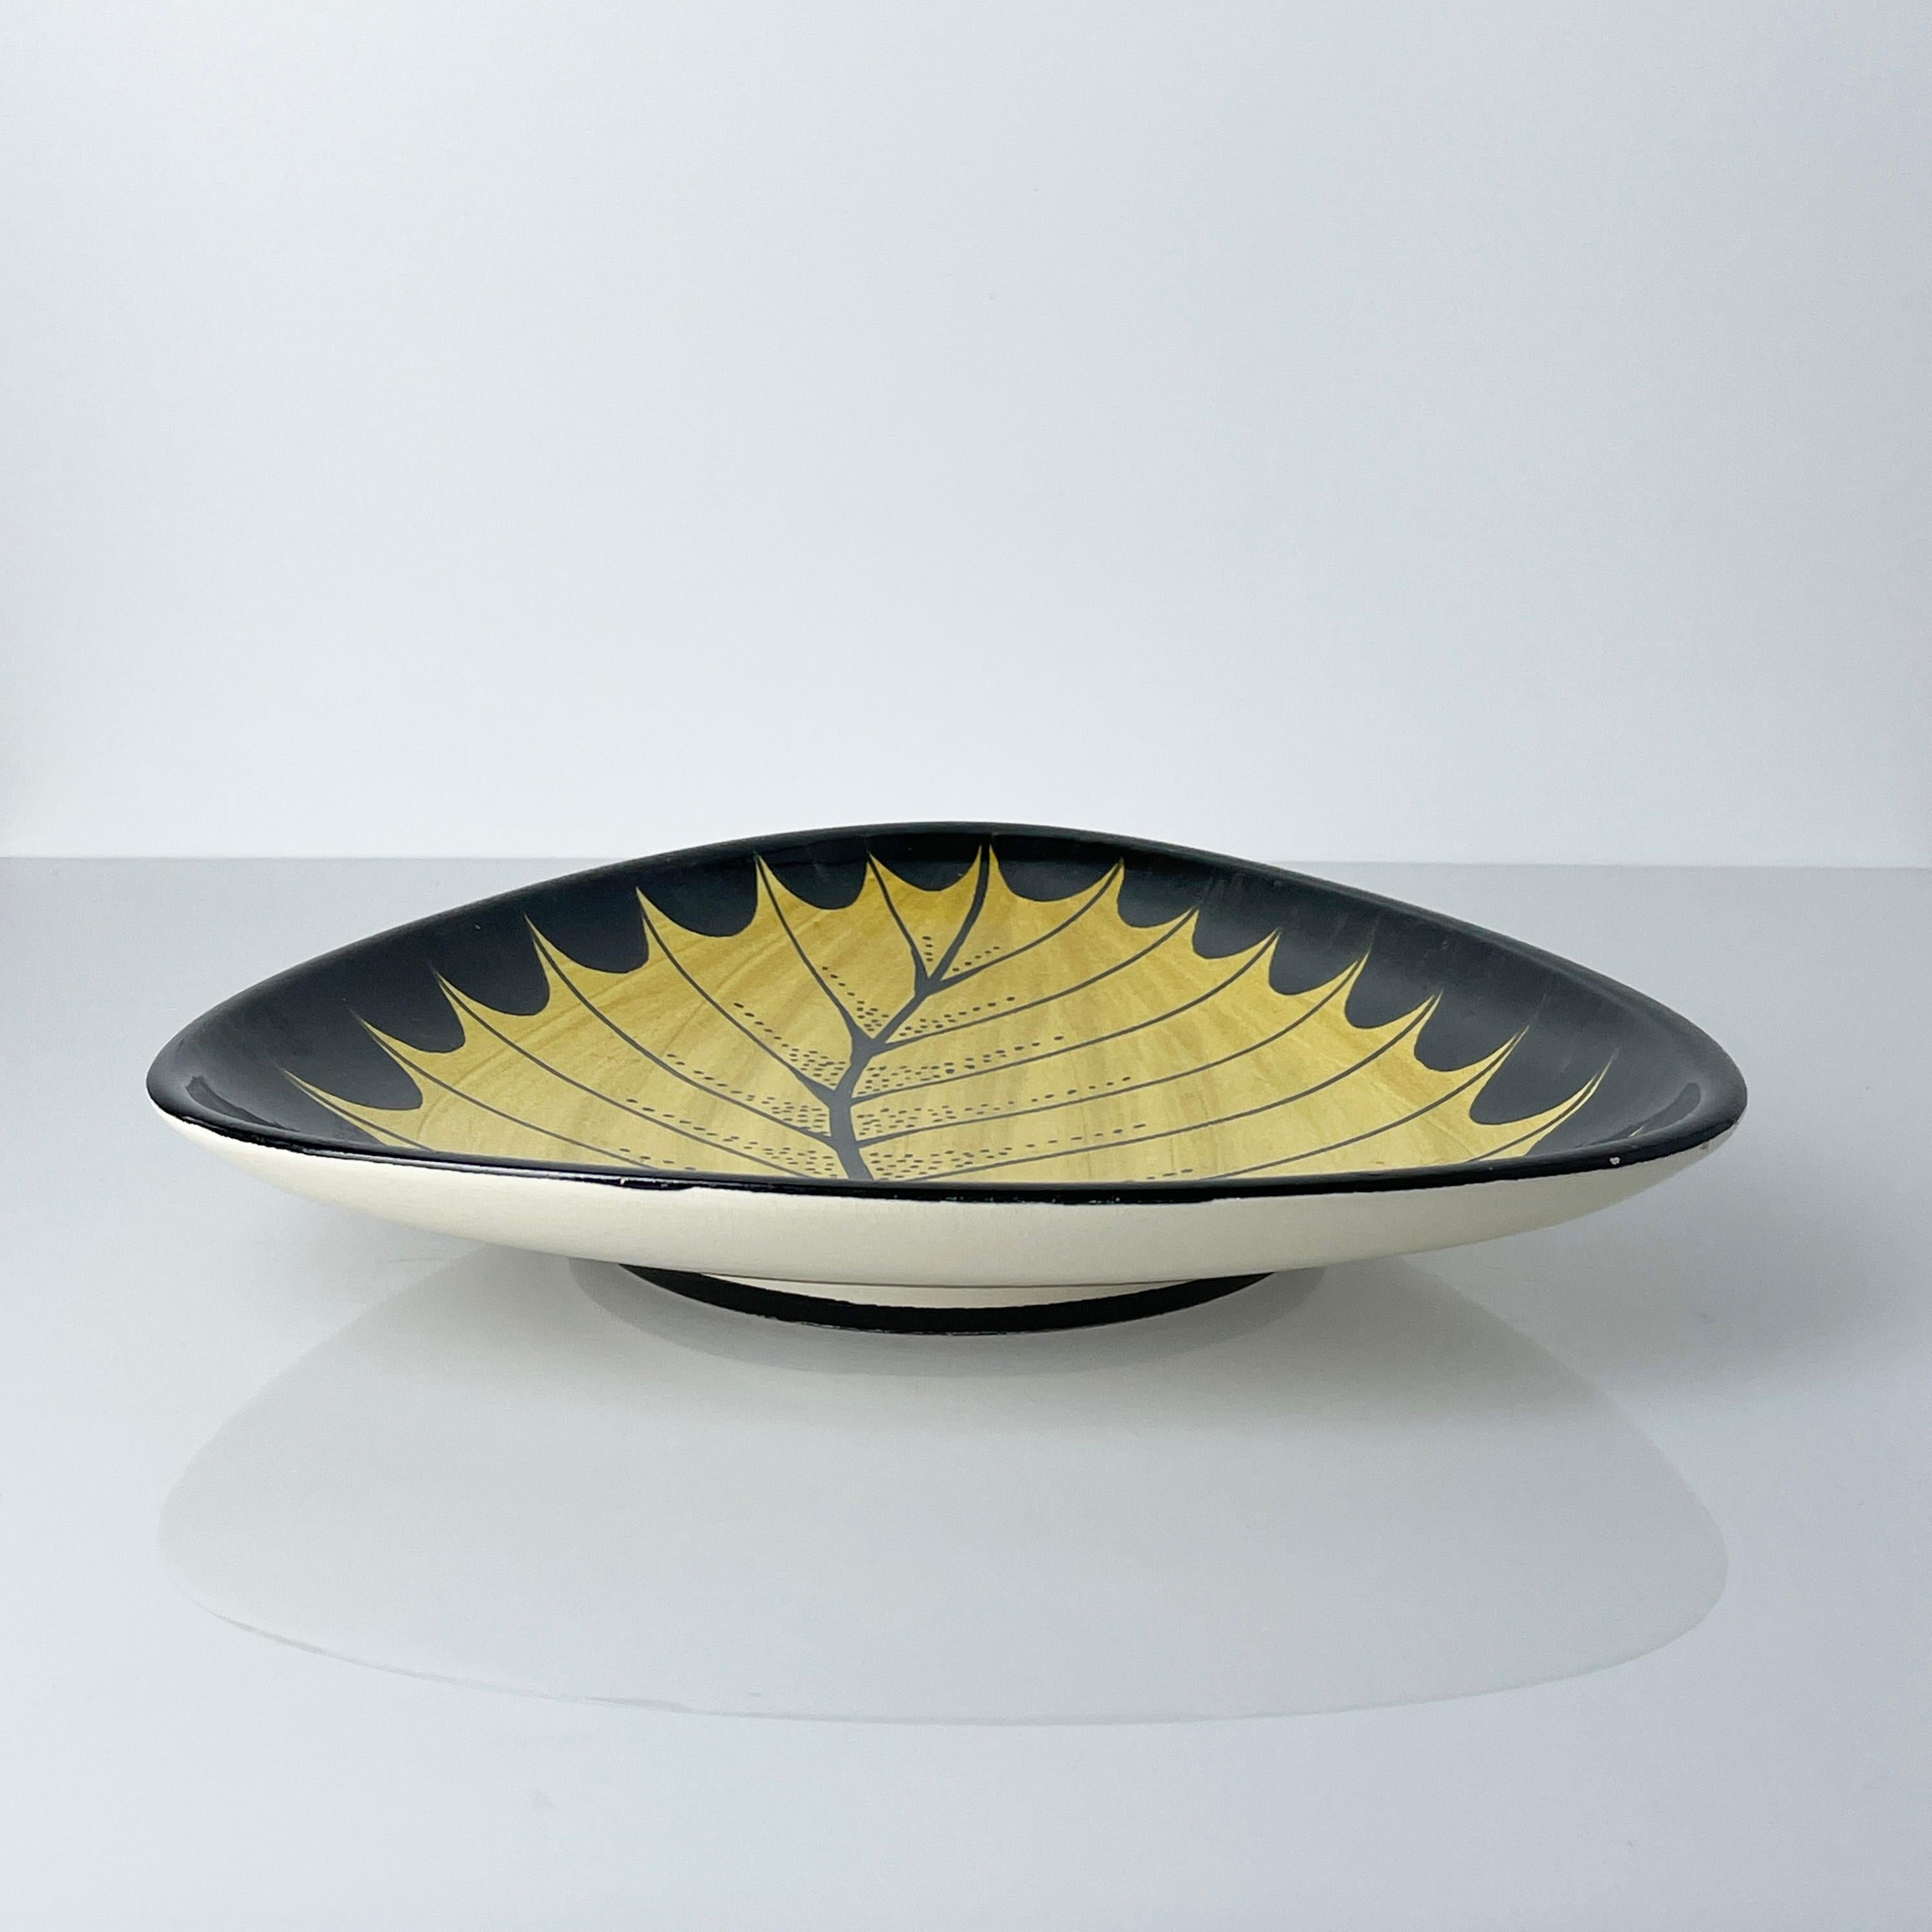 German 1950's Decorative Ceramic Plate / Bowl For Sale